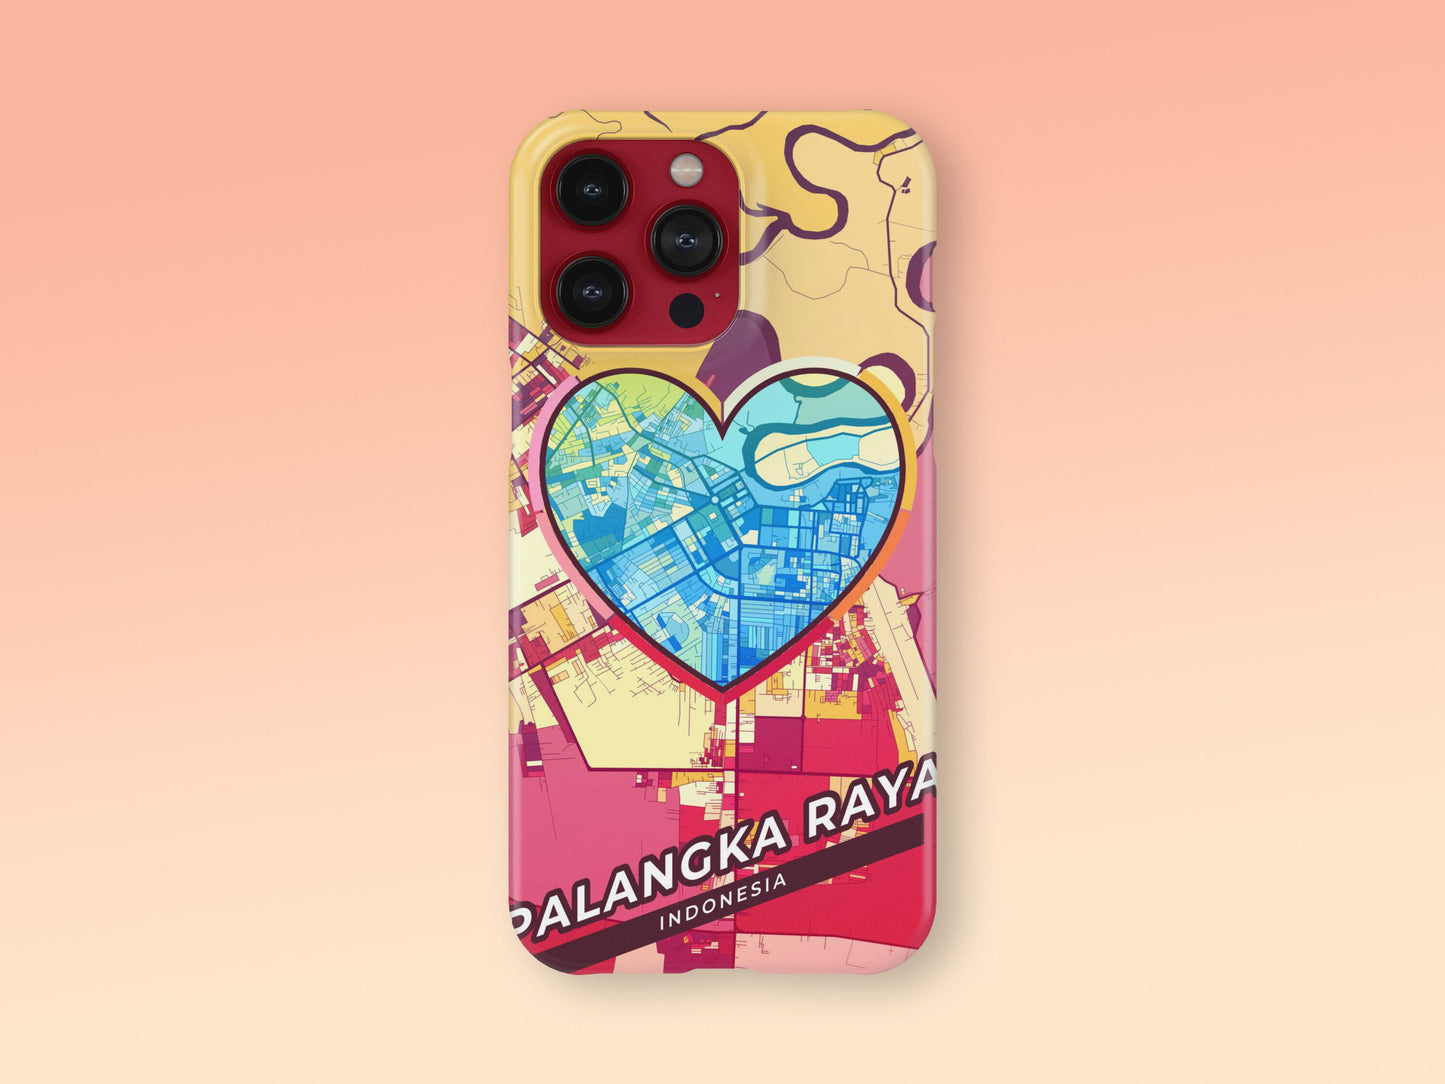 Palangka Raya Indonesia slim phone case with colorful icon 2